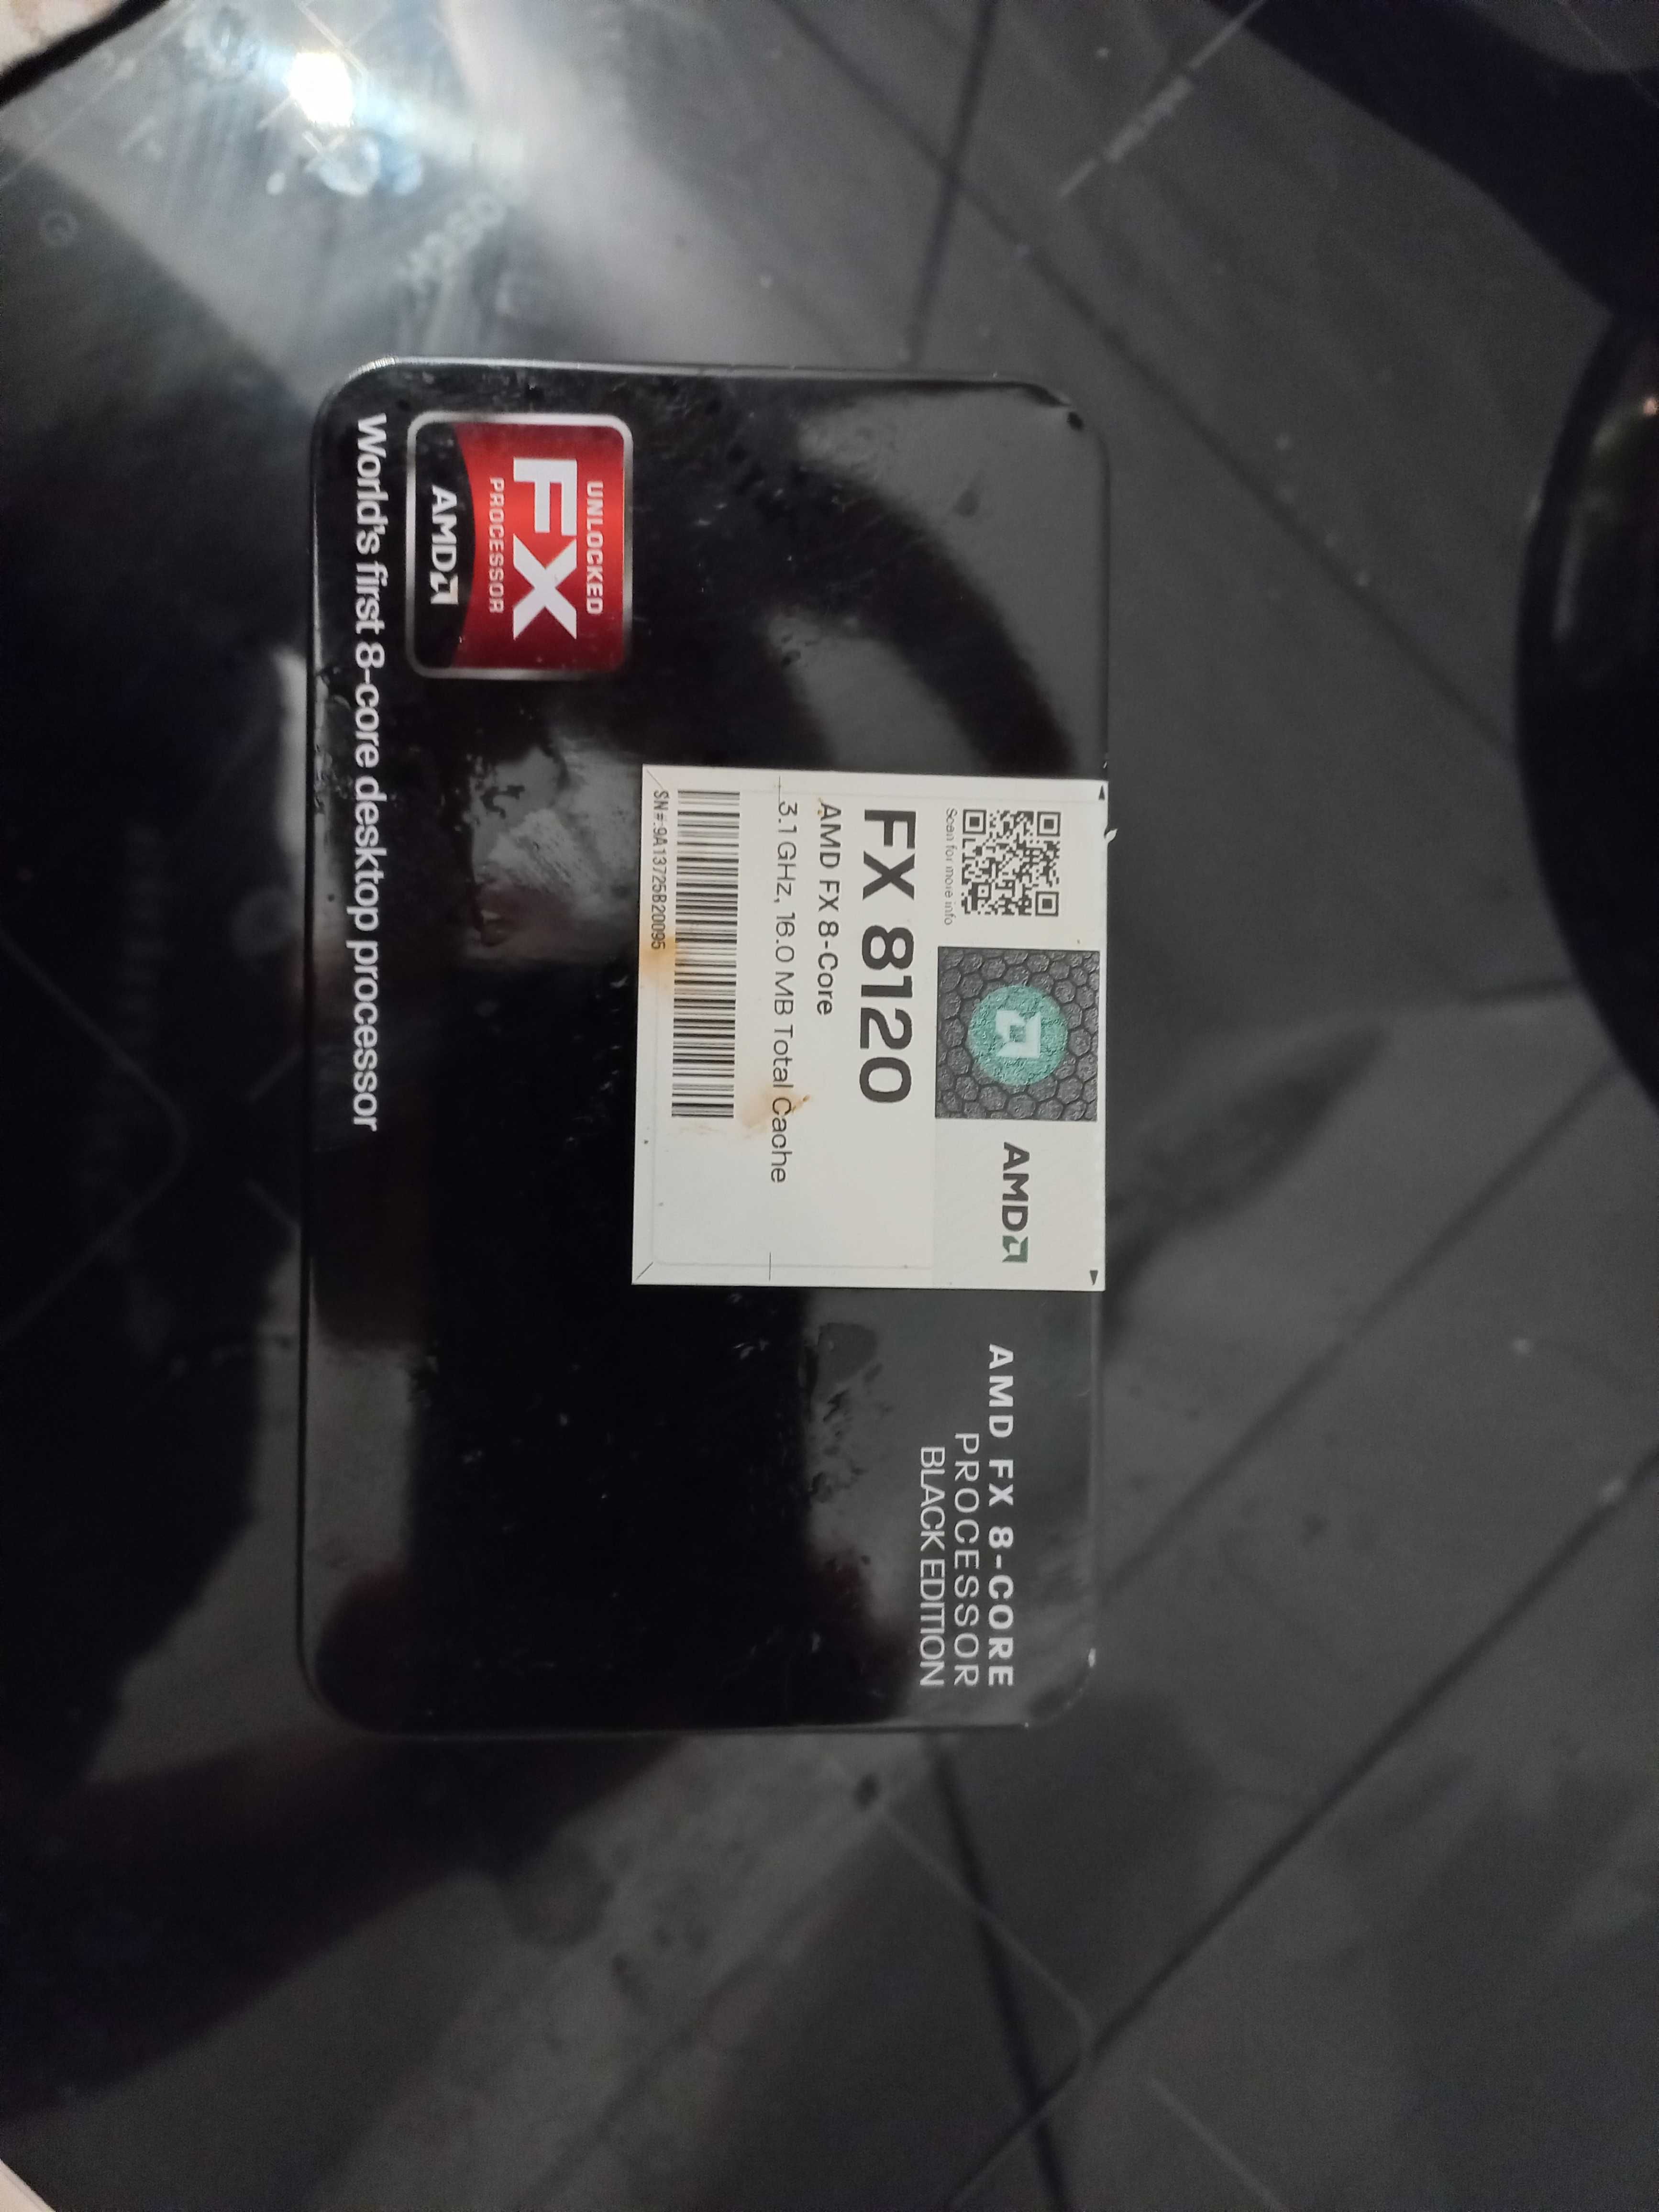 Procesor AMD FX 8120